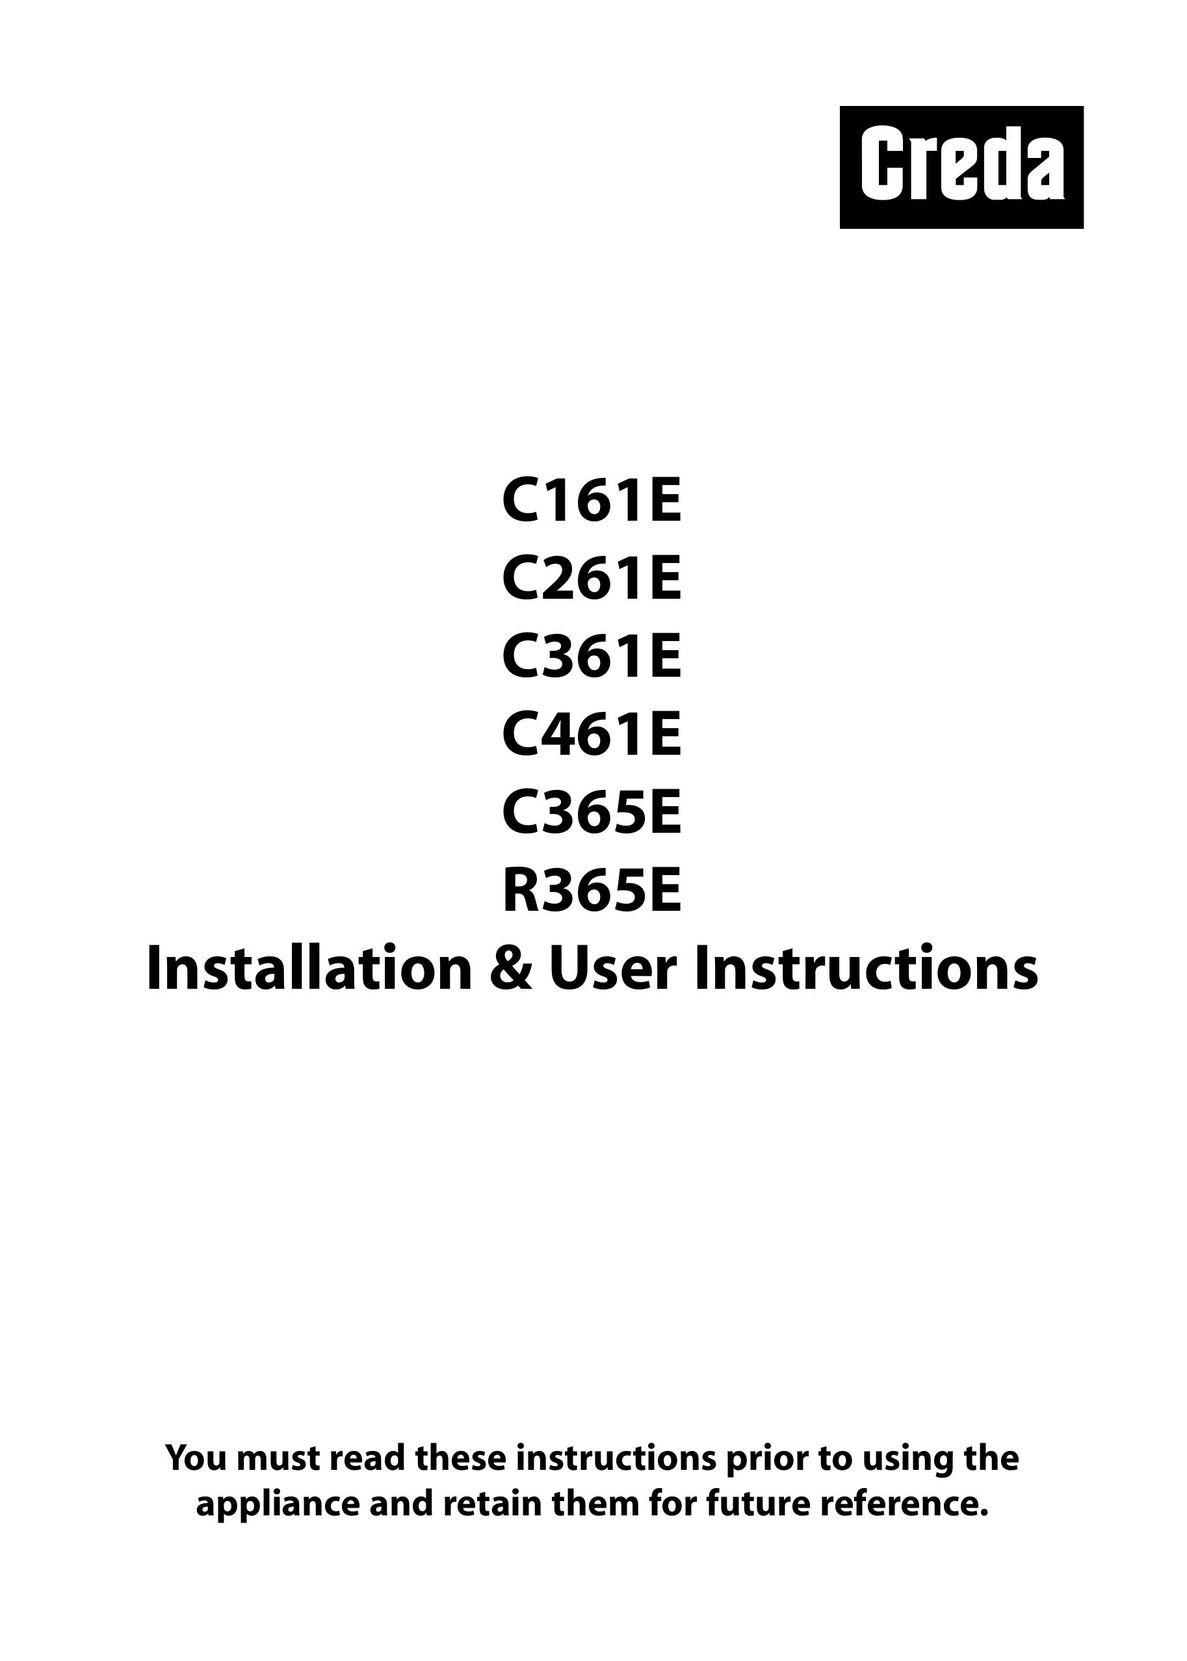 Creda C361E Cooktop User Manual